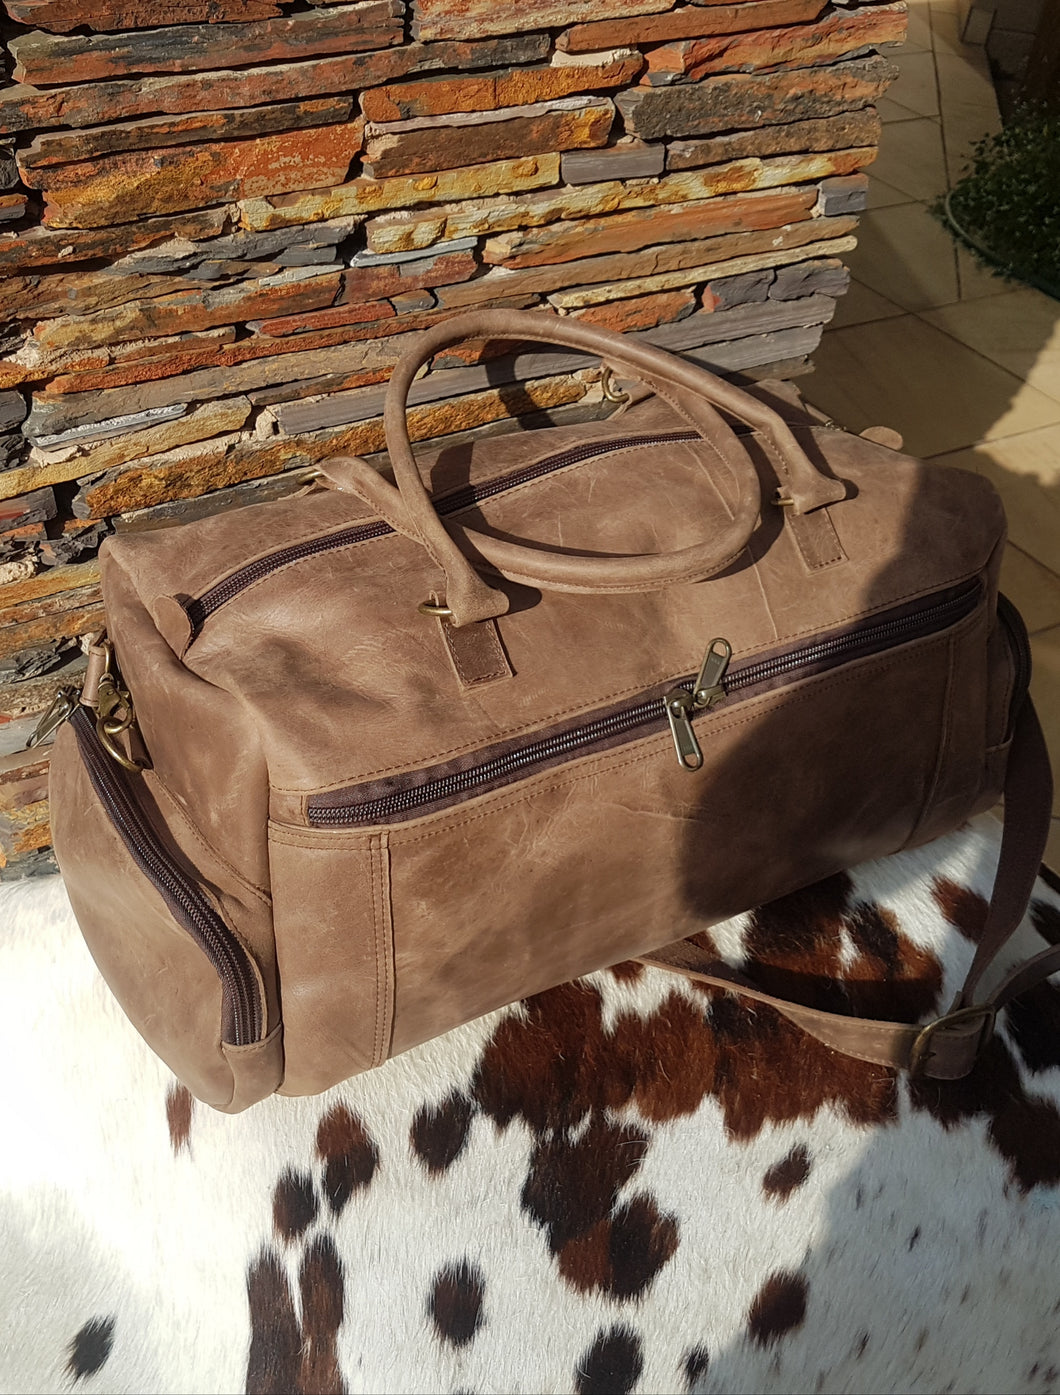 Extra Large Travelbag - Matt Dark Brown